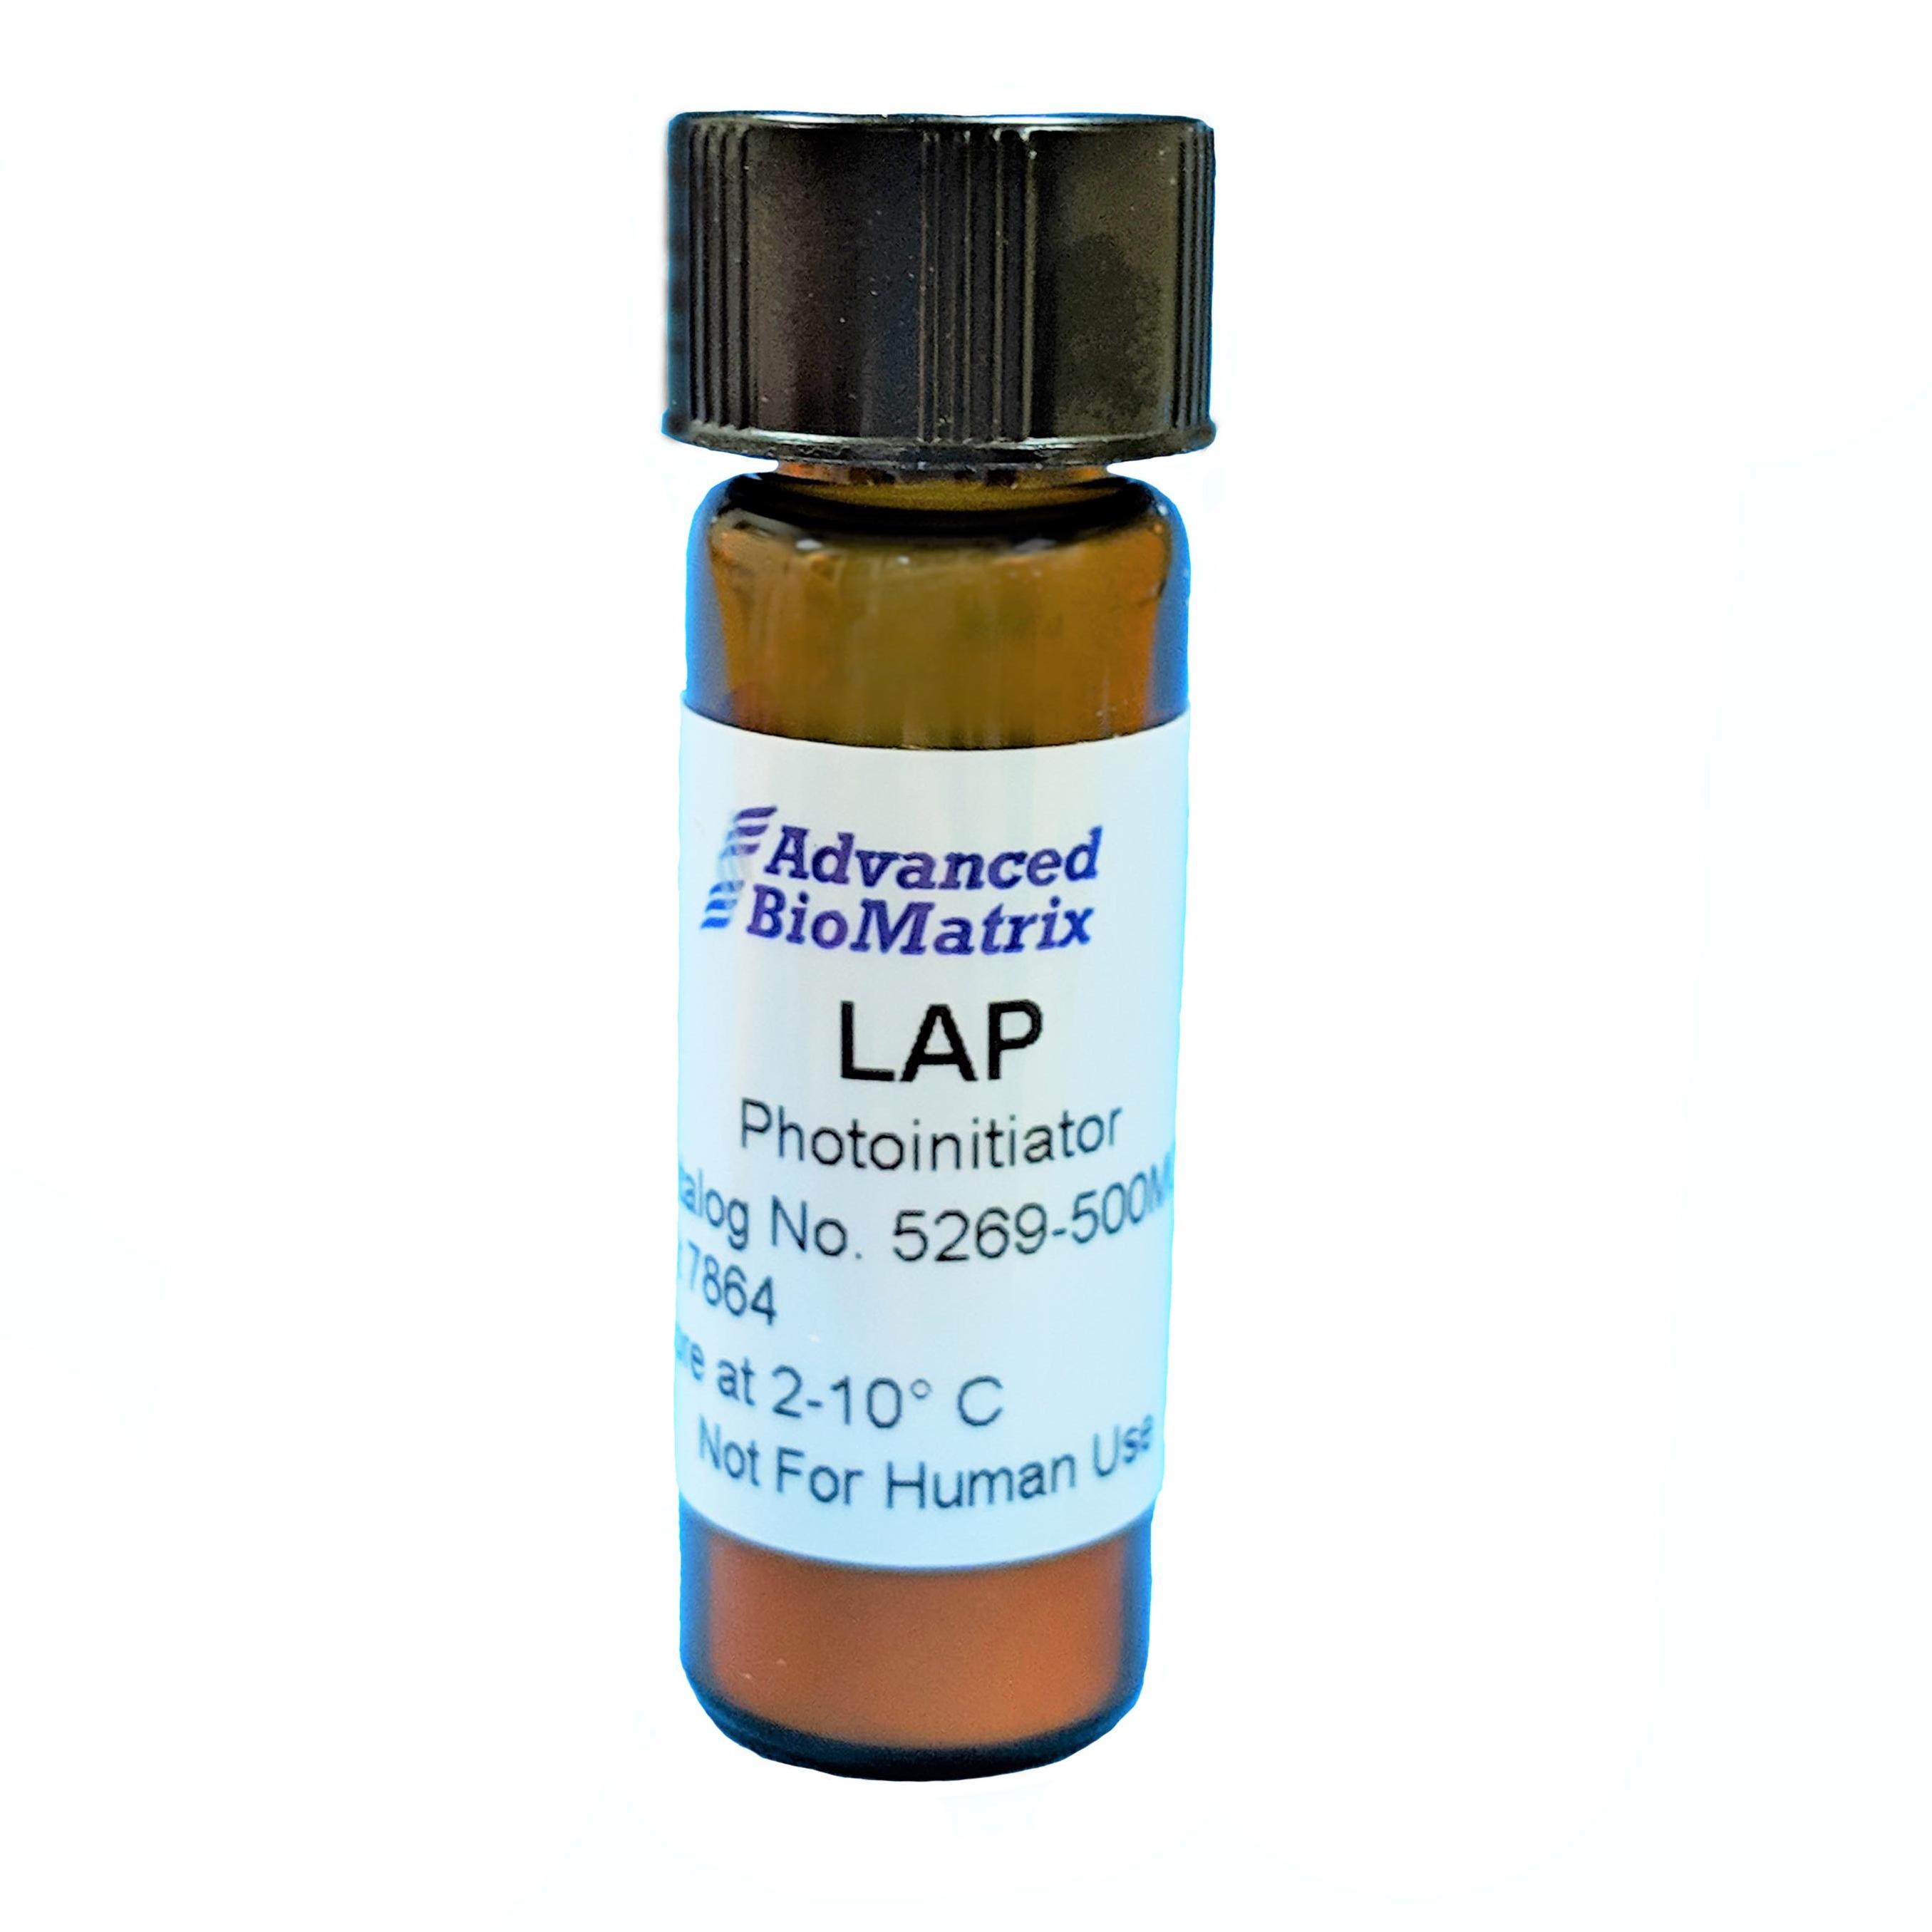 LAP photoinitiator for 405 nm blue light photocrosslinking